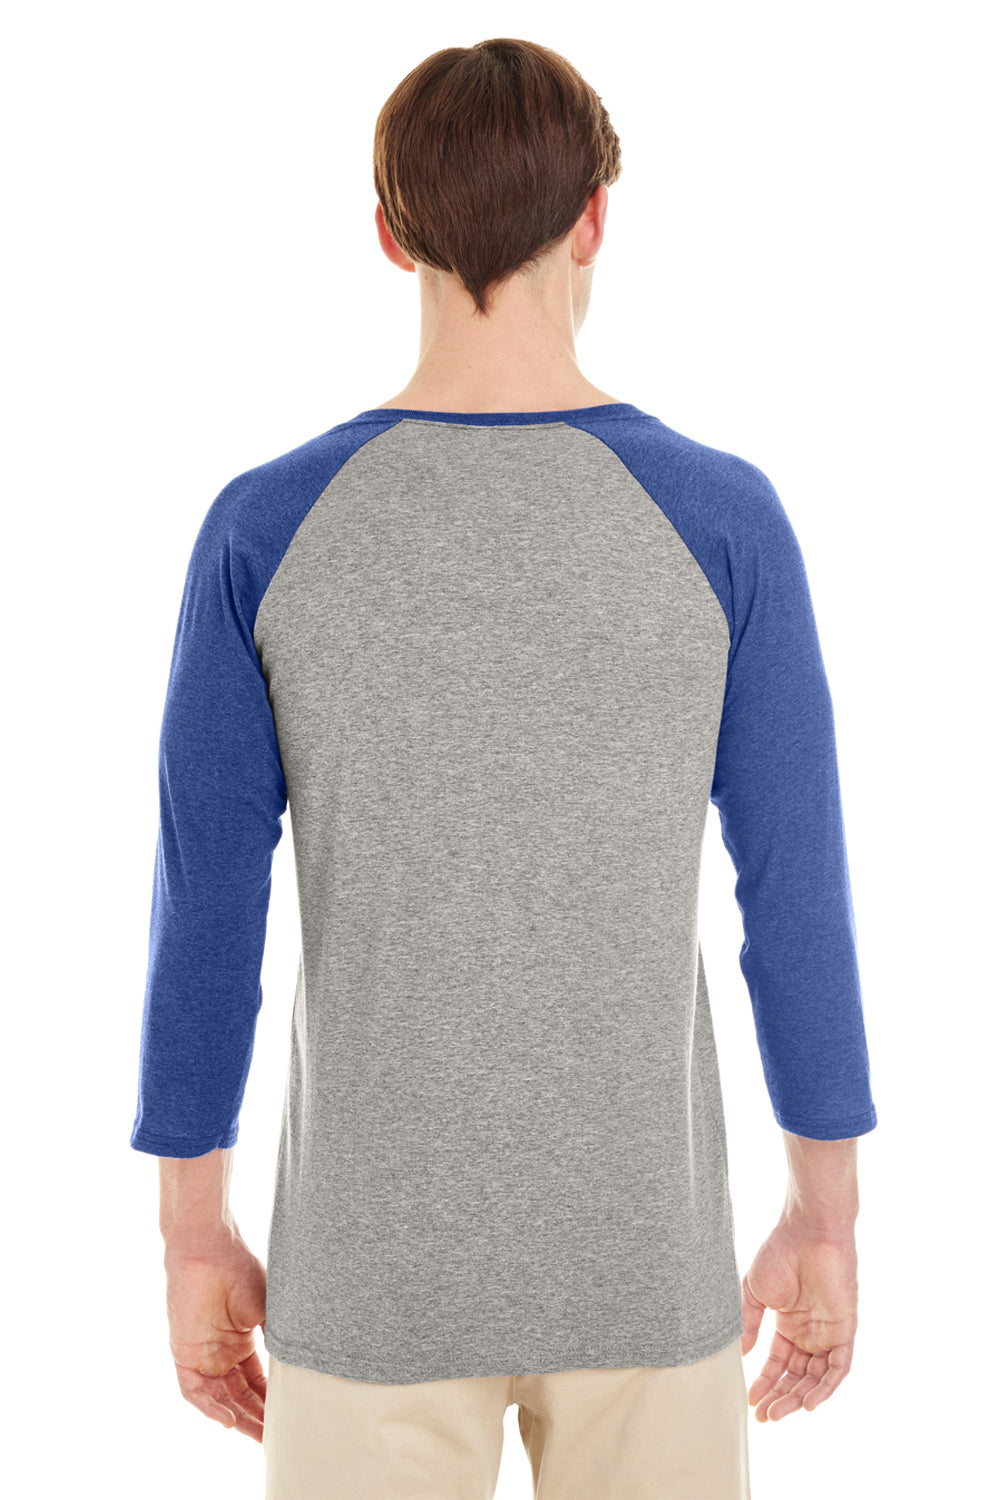 Jerzees 601RR Mens 3/4 Sleeve Crewneck T-Shirt Oxford Grey/Blue Back